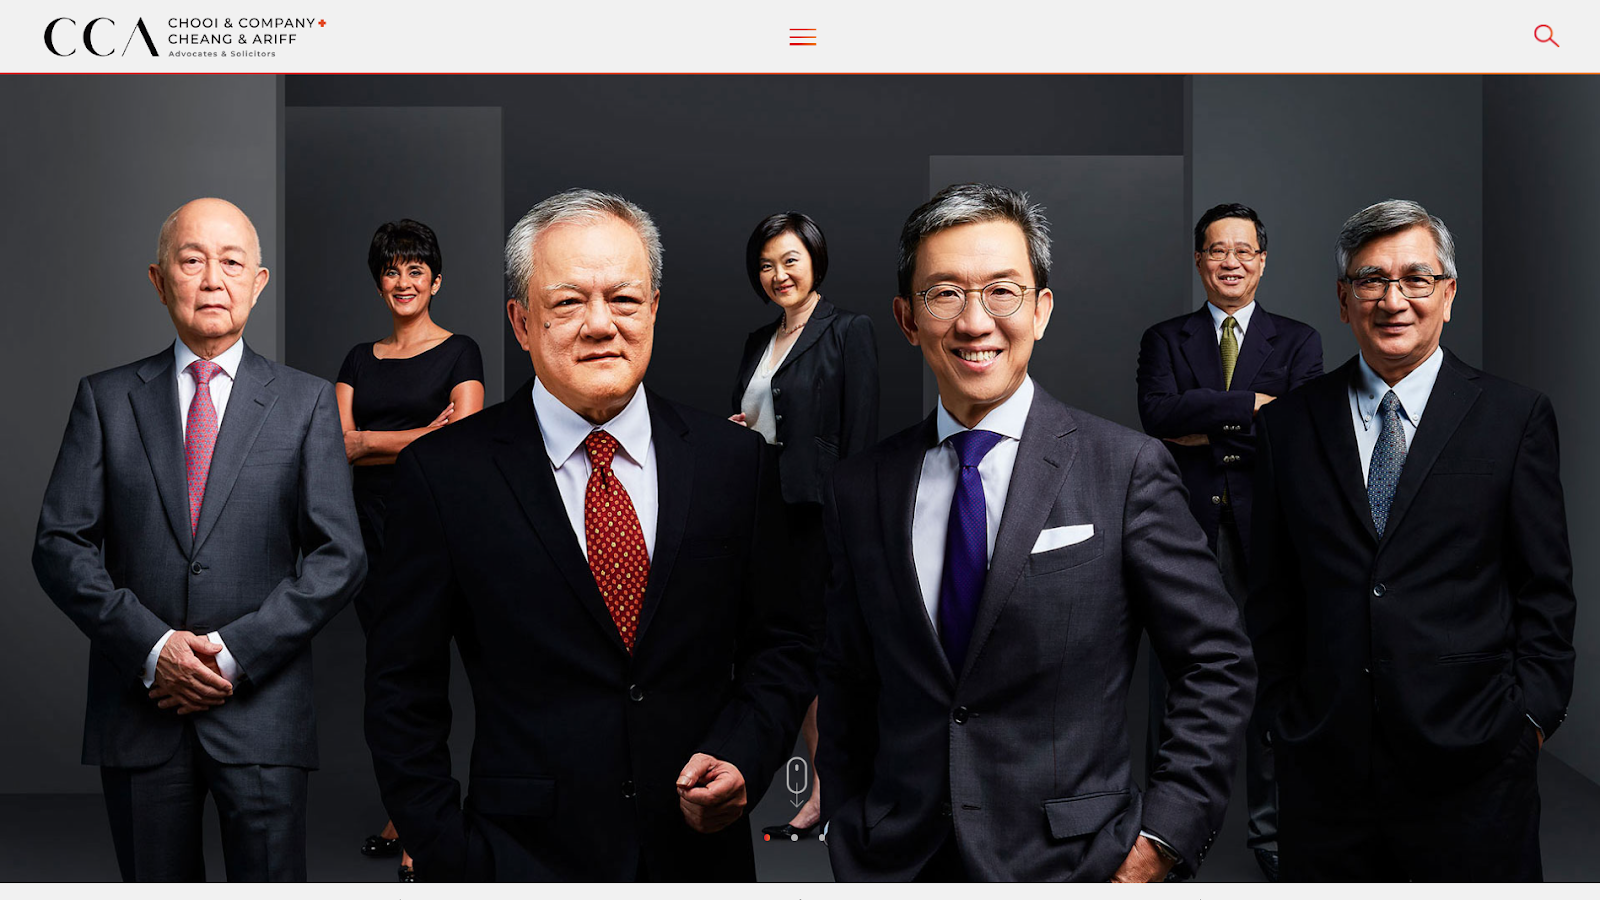 Screenshot of Chooi & Company + Cheang & Ariff Law Firm website